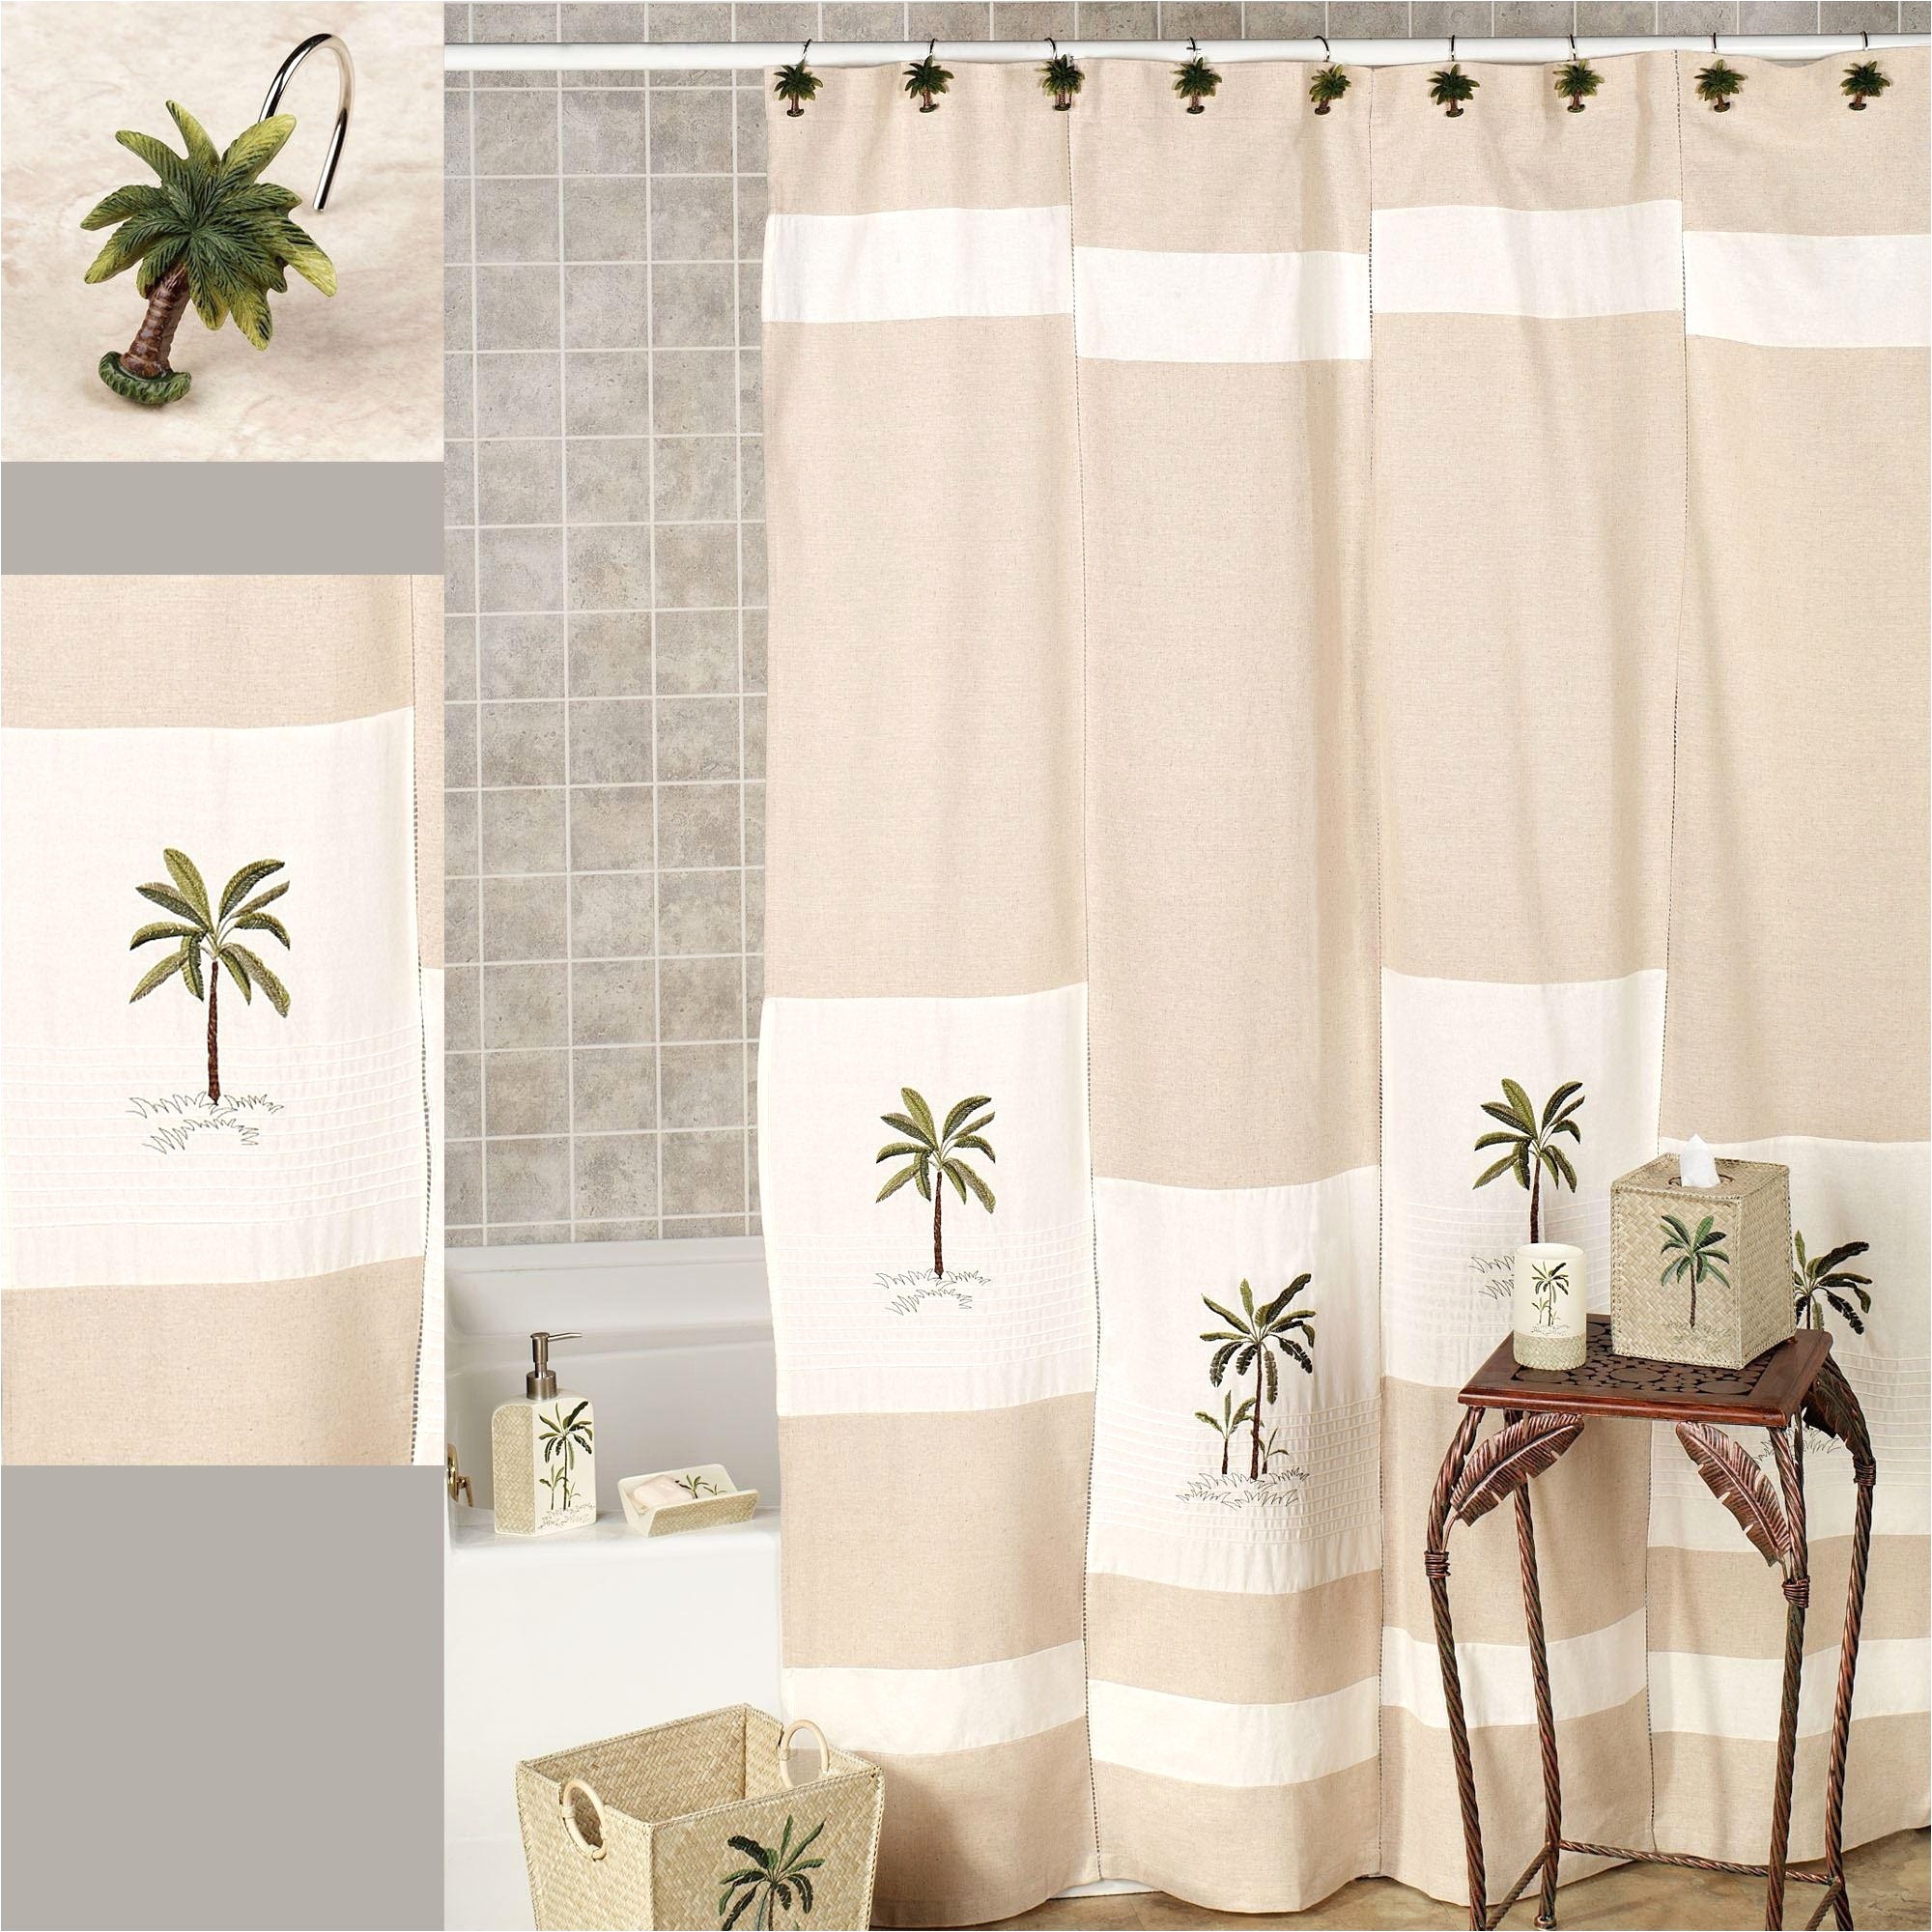 Extended Shower Chair 26 Fresh 12 Curtain Rod Shower Curtains Ideas Design